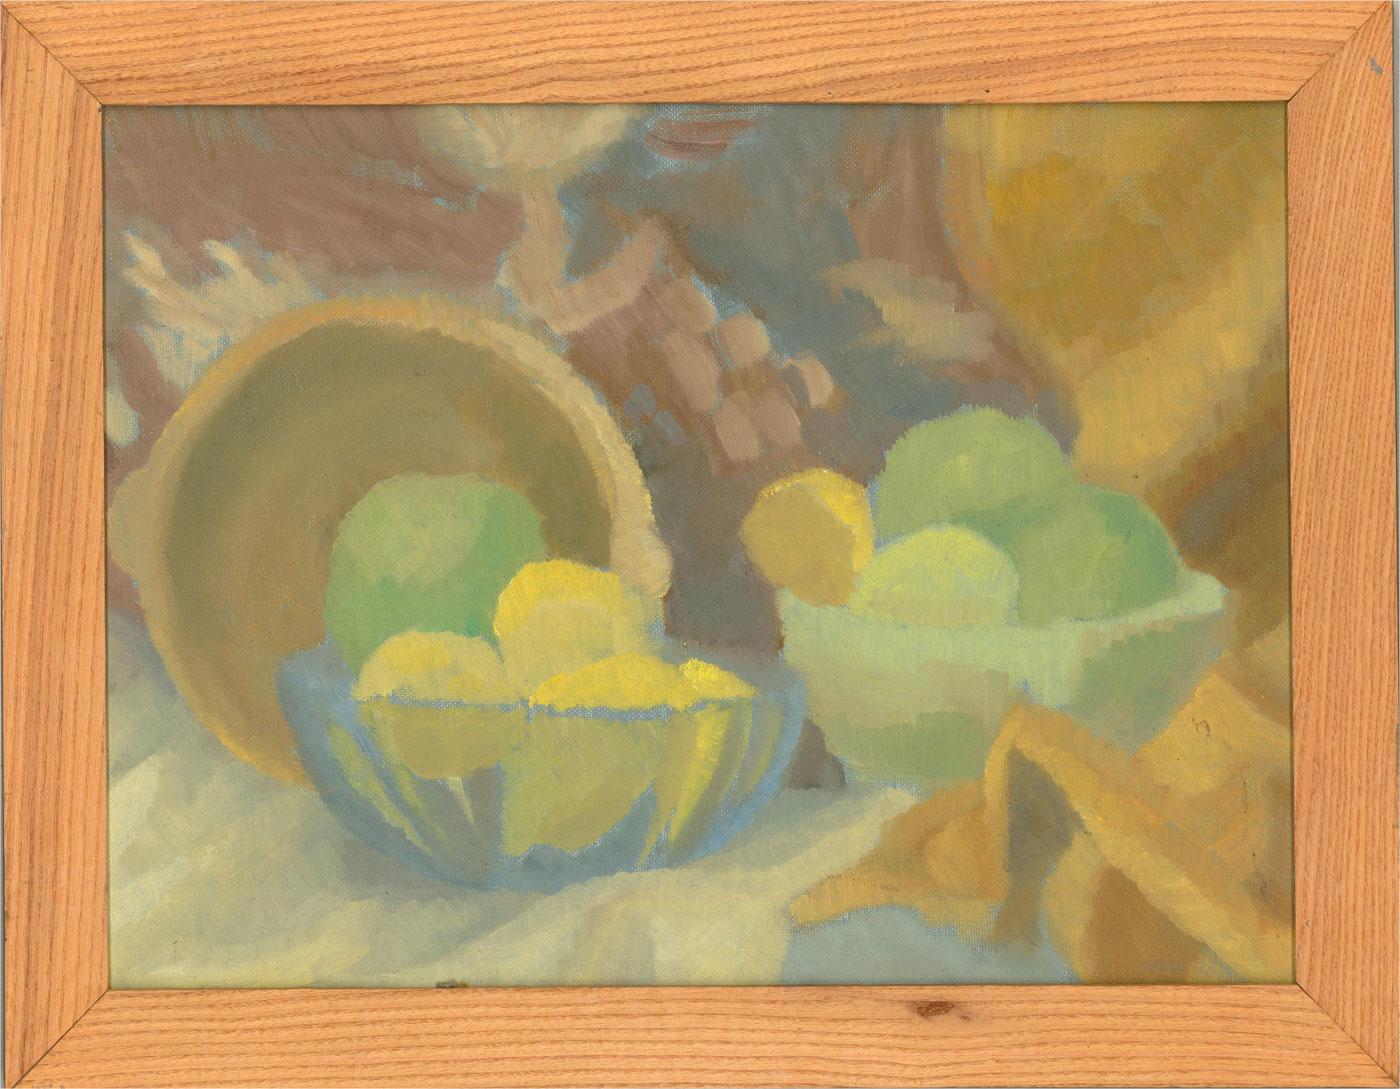 Unknown Still-Life Painting - Mary Willett - 1993 Oil, Still Life with Lemons